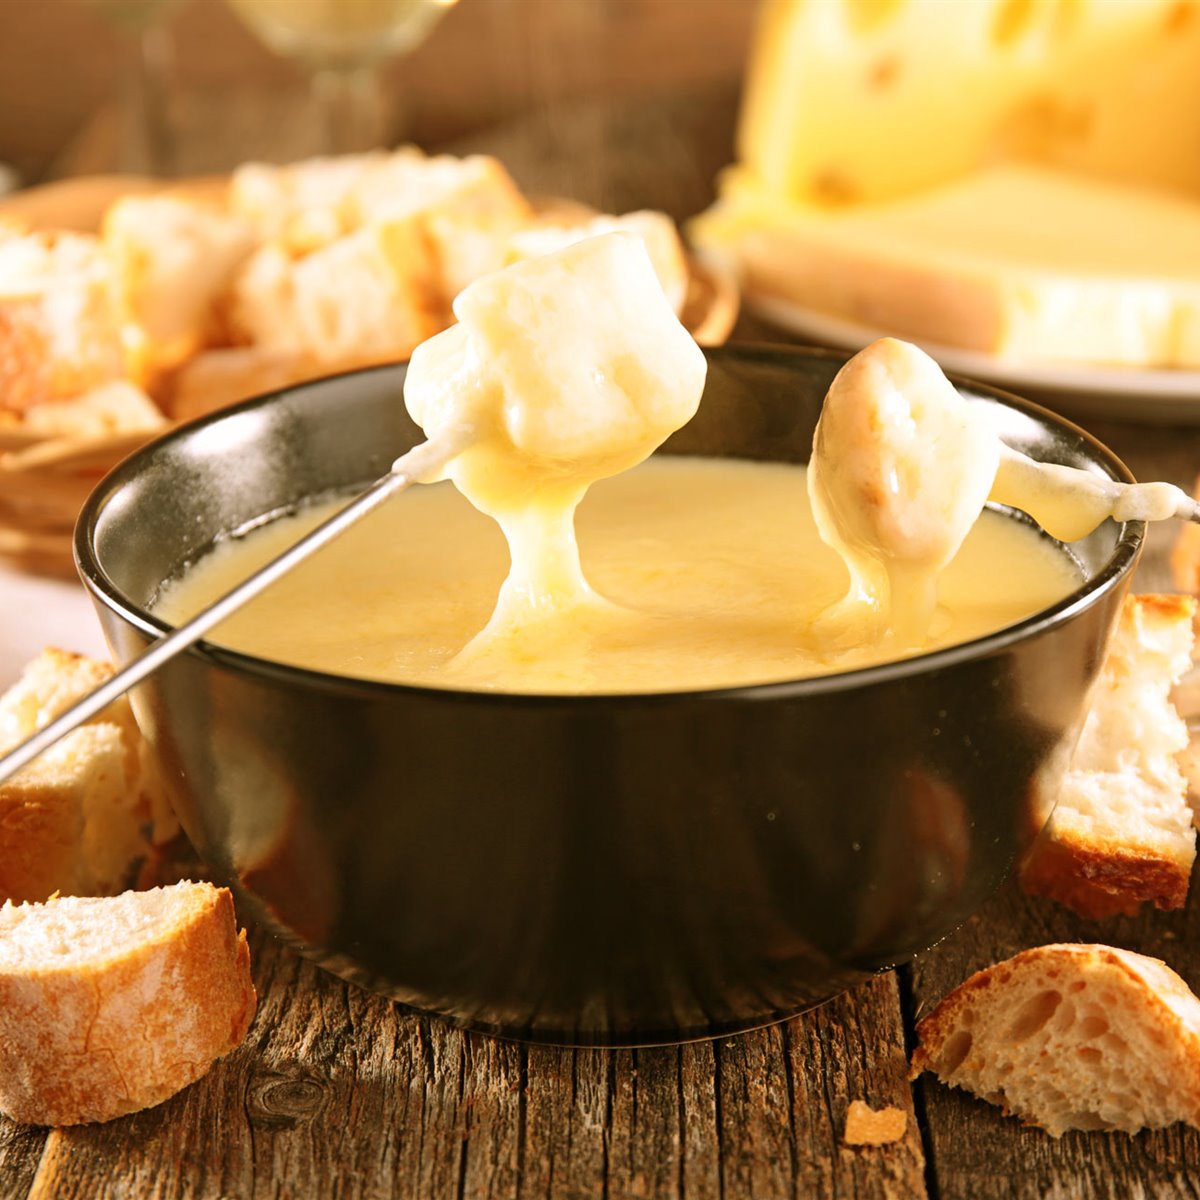 https://content-cocina.lecturas.com/medio/2022/03/20/fondue-de-queso_ab200f7b_1200x1200.jpg